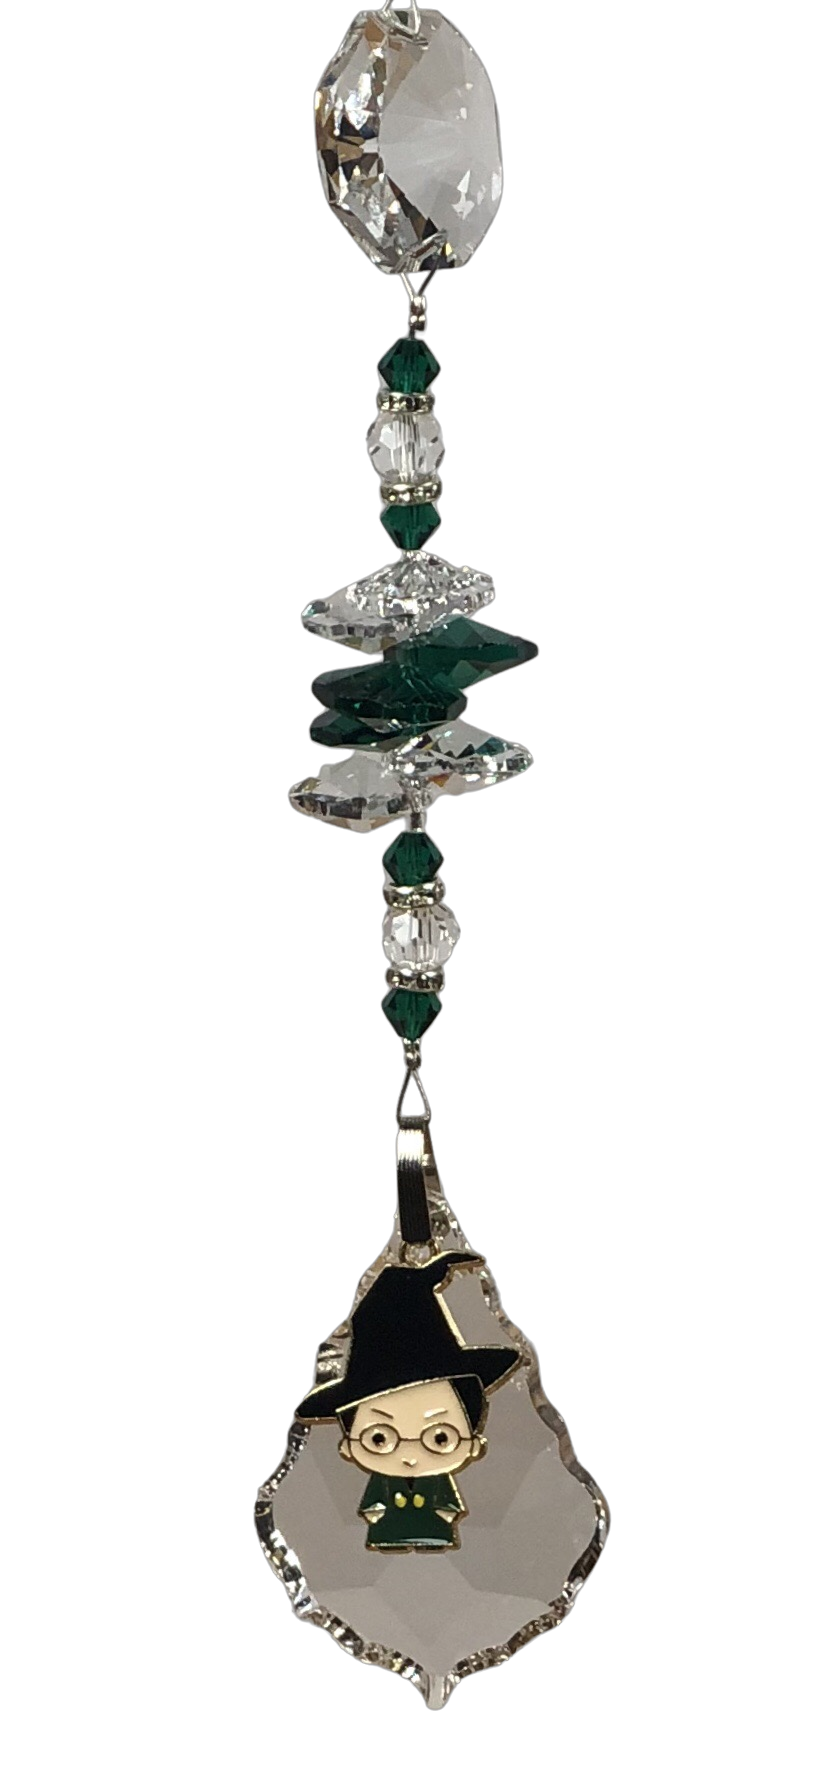 Harry Potter professor McGonagall - crystal suncatcher, decorated with 50mm starburst crystal and malachite gemstone.